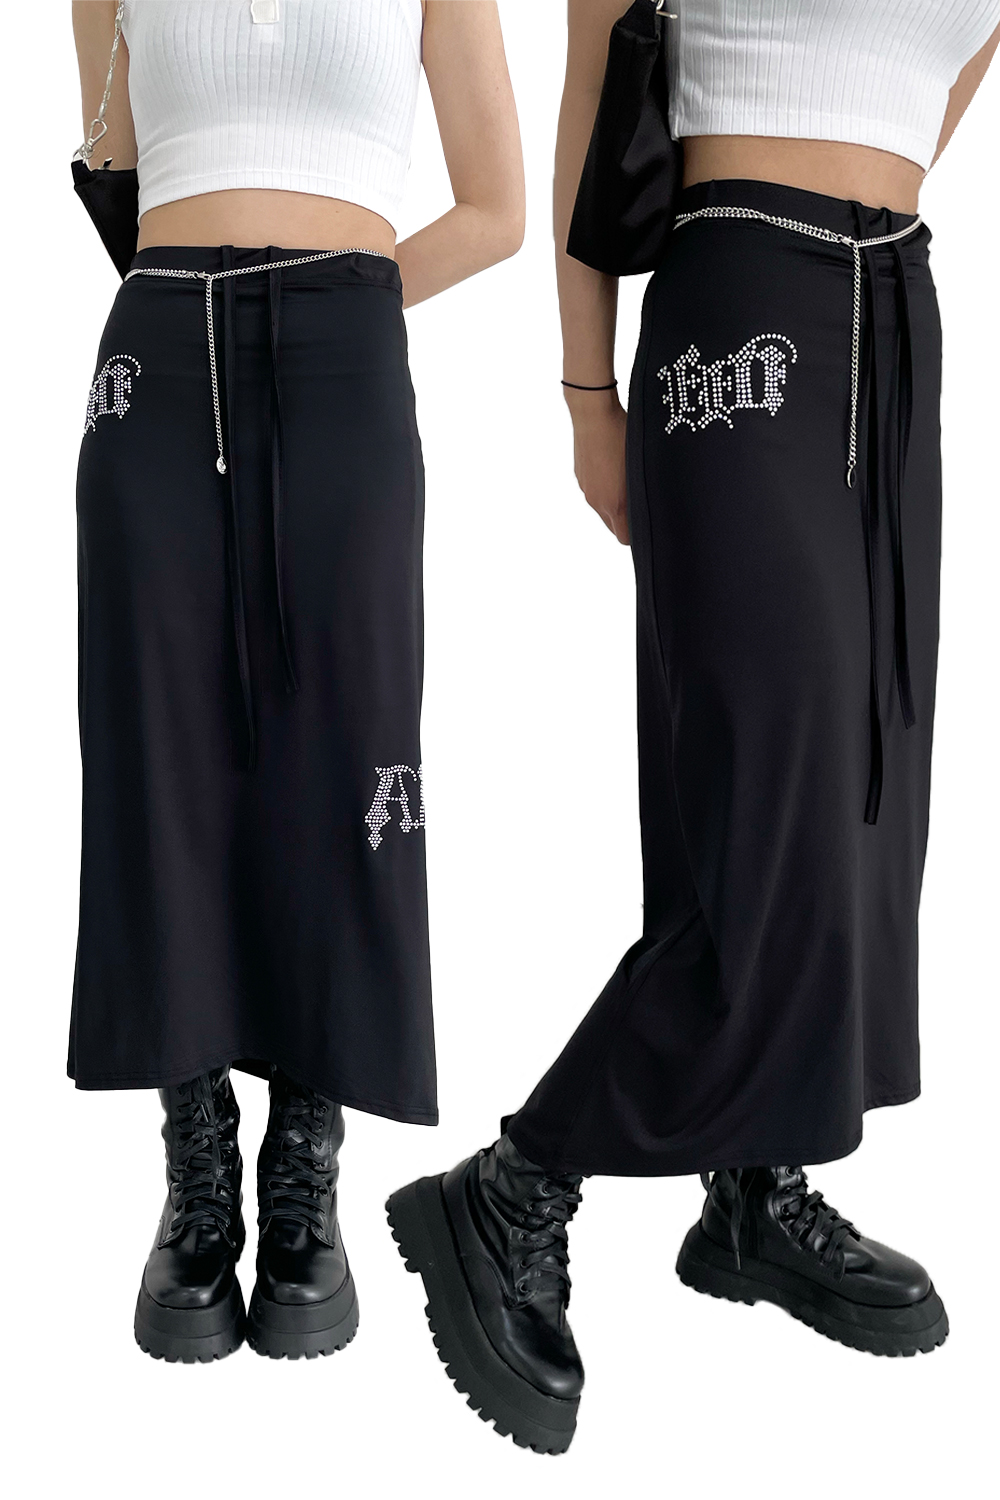 black satin cubic skirts